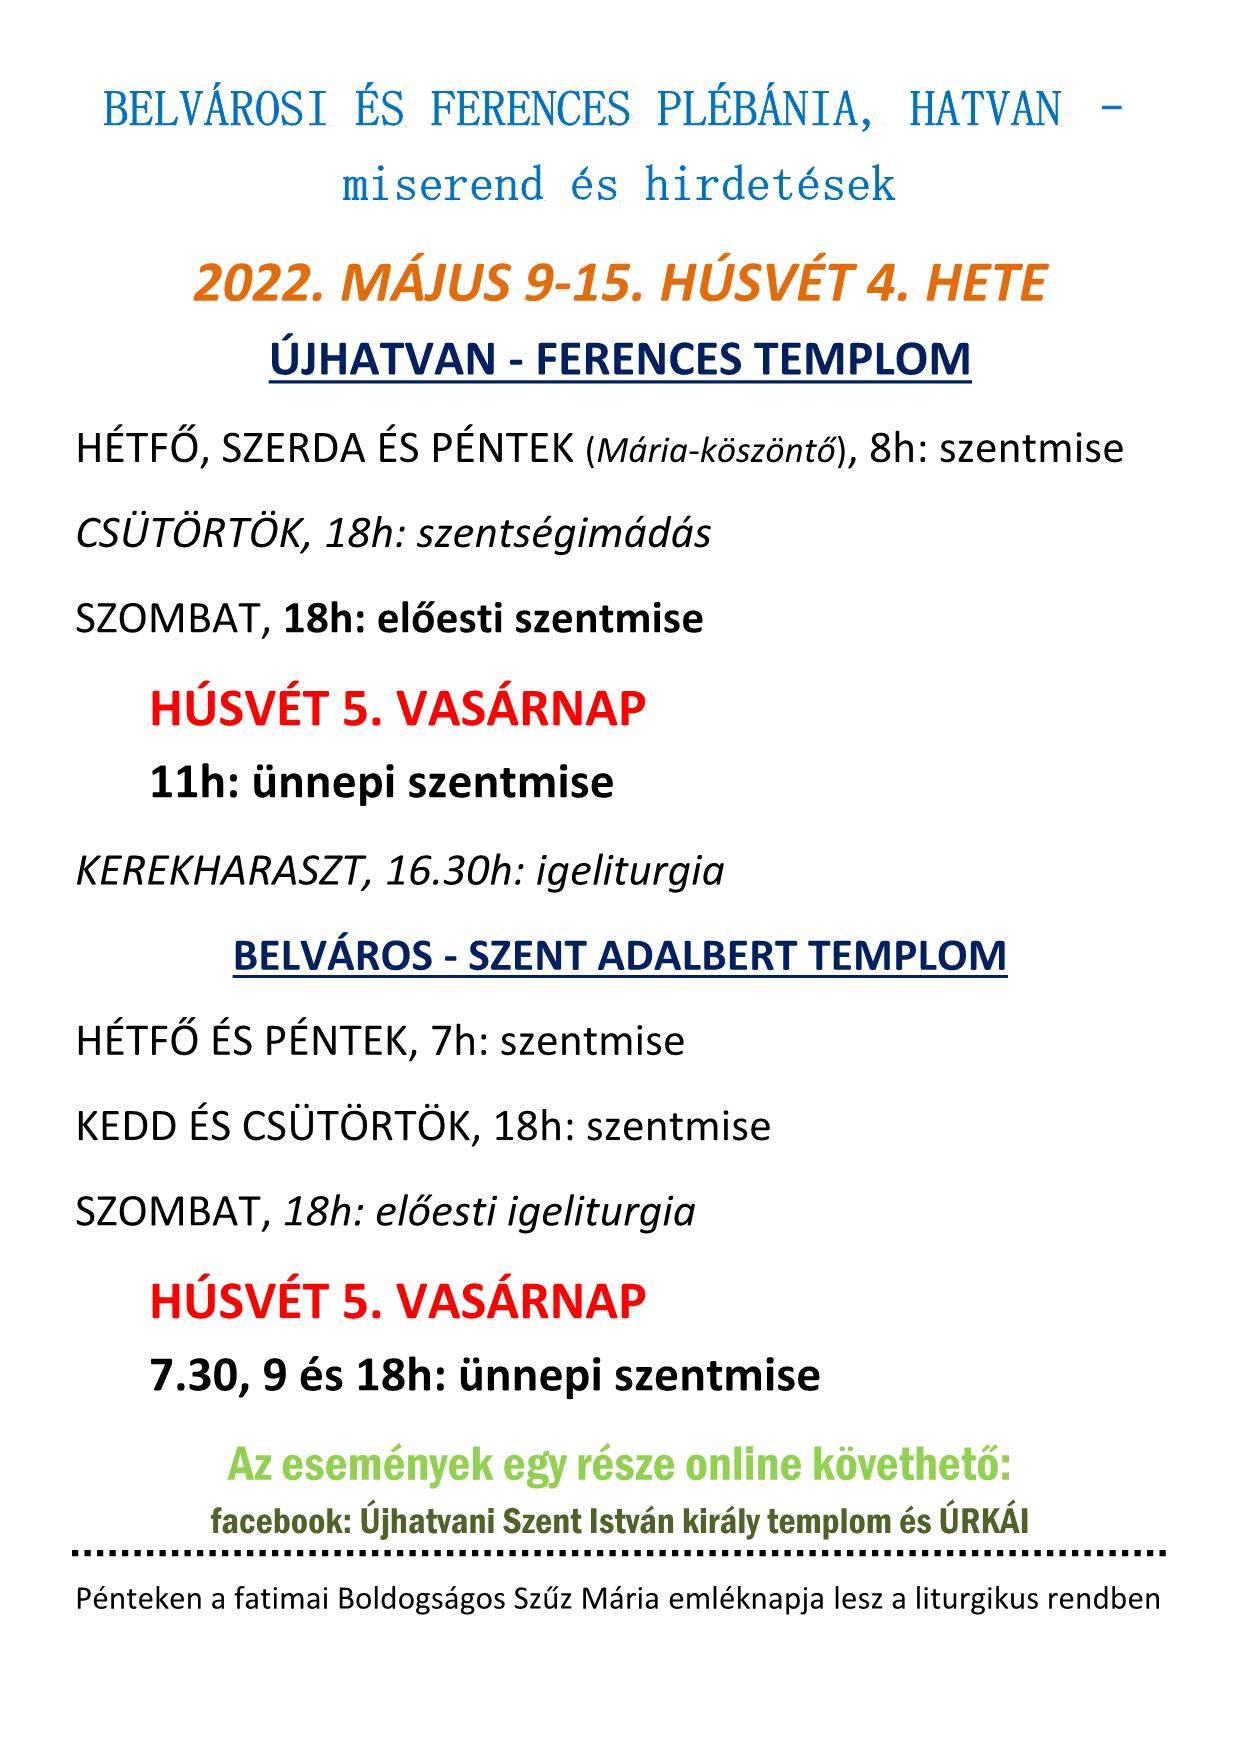 HATVAN FERENCES 2022.05.08 1